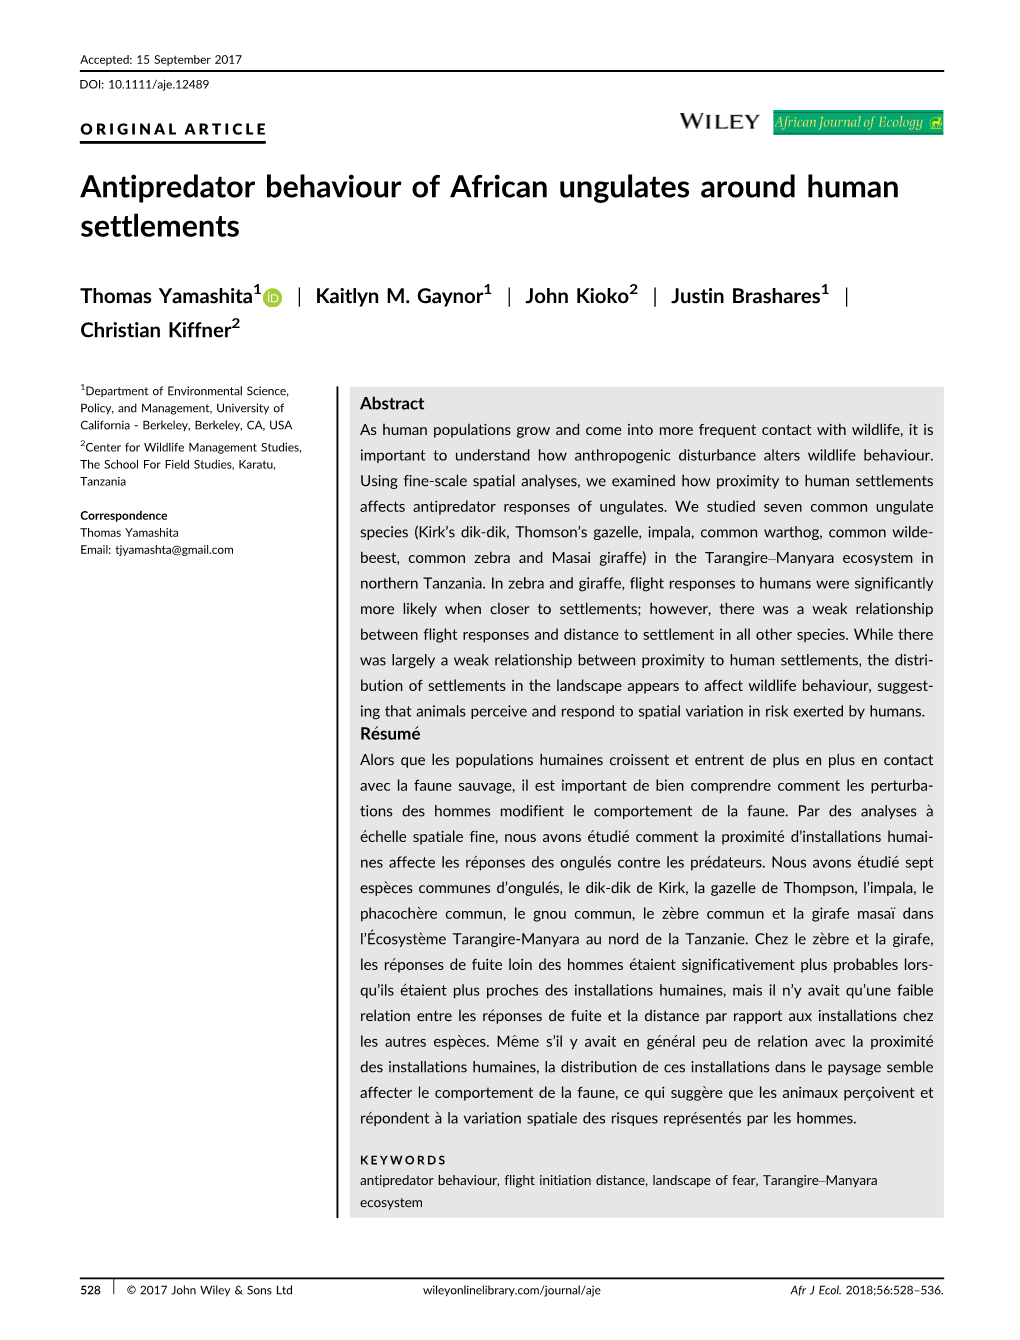 Antipredator Behaviour of African Ungulates Around Human Settlements